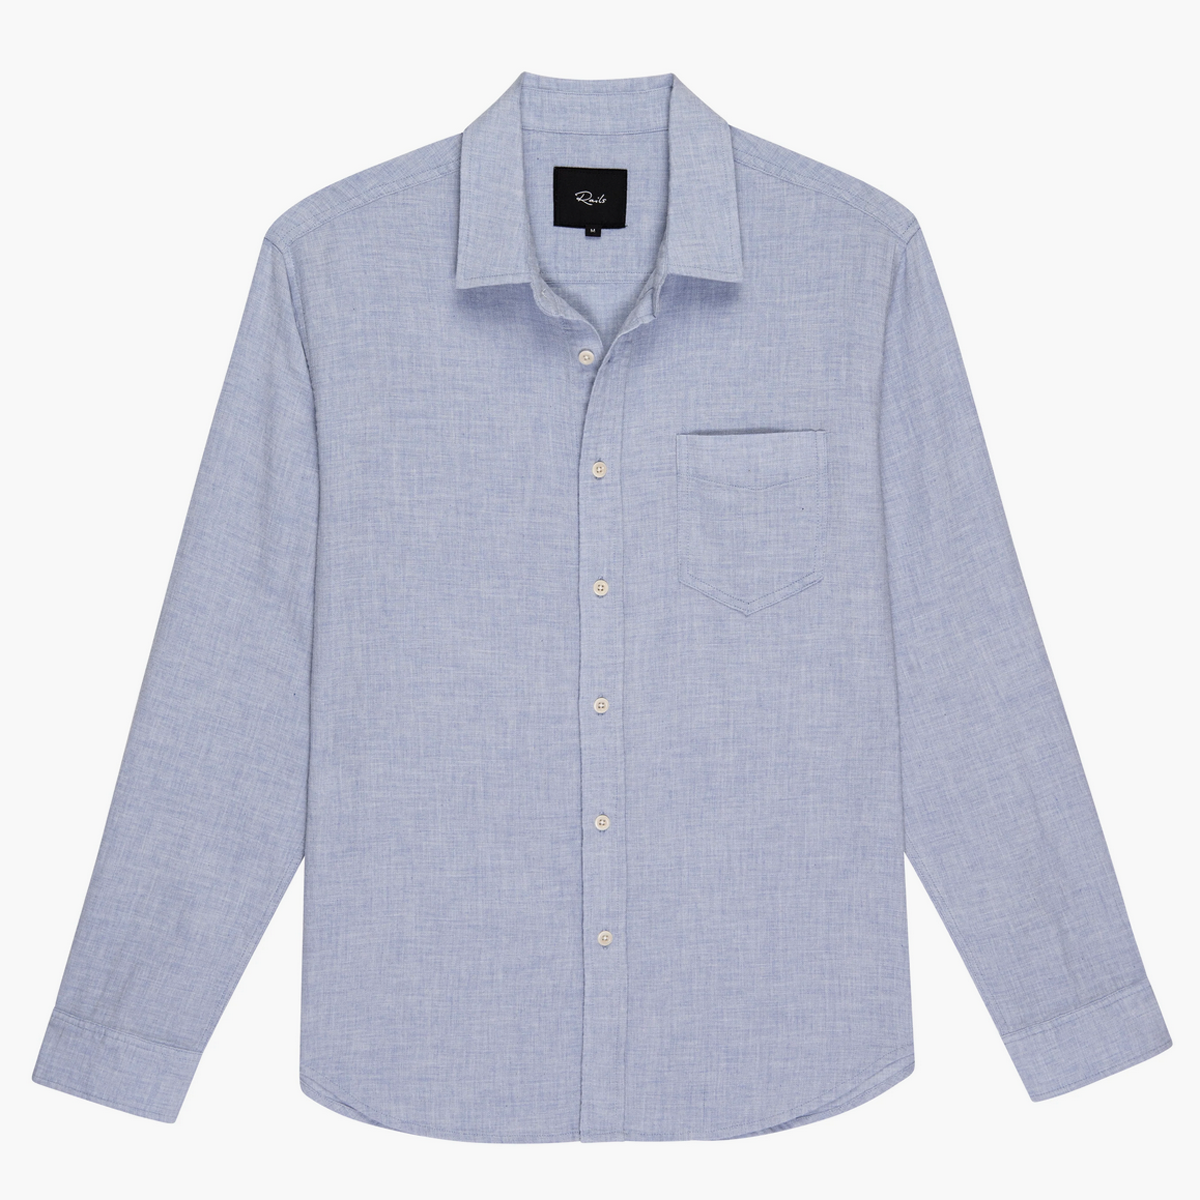 WYATT Cotton Shirt - BLUE MELANGE from Rails